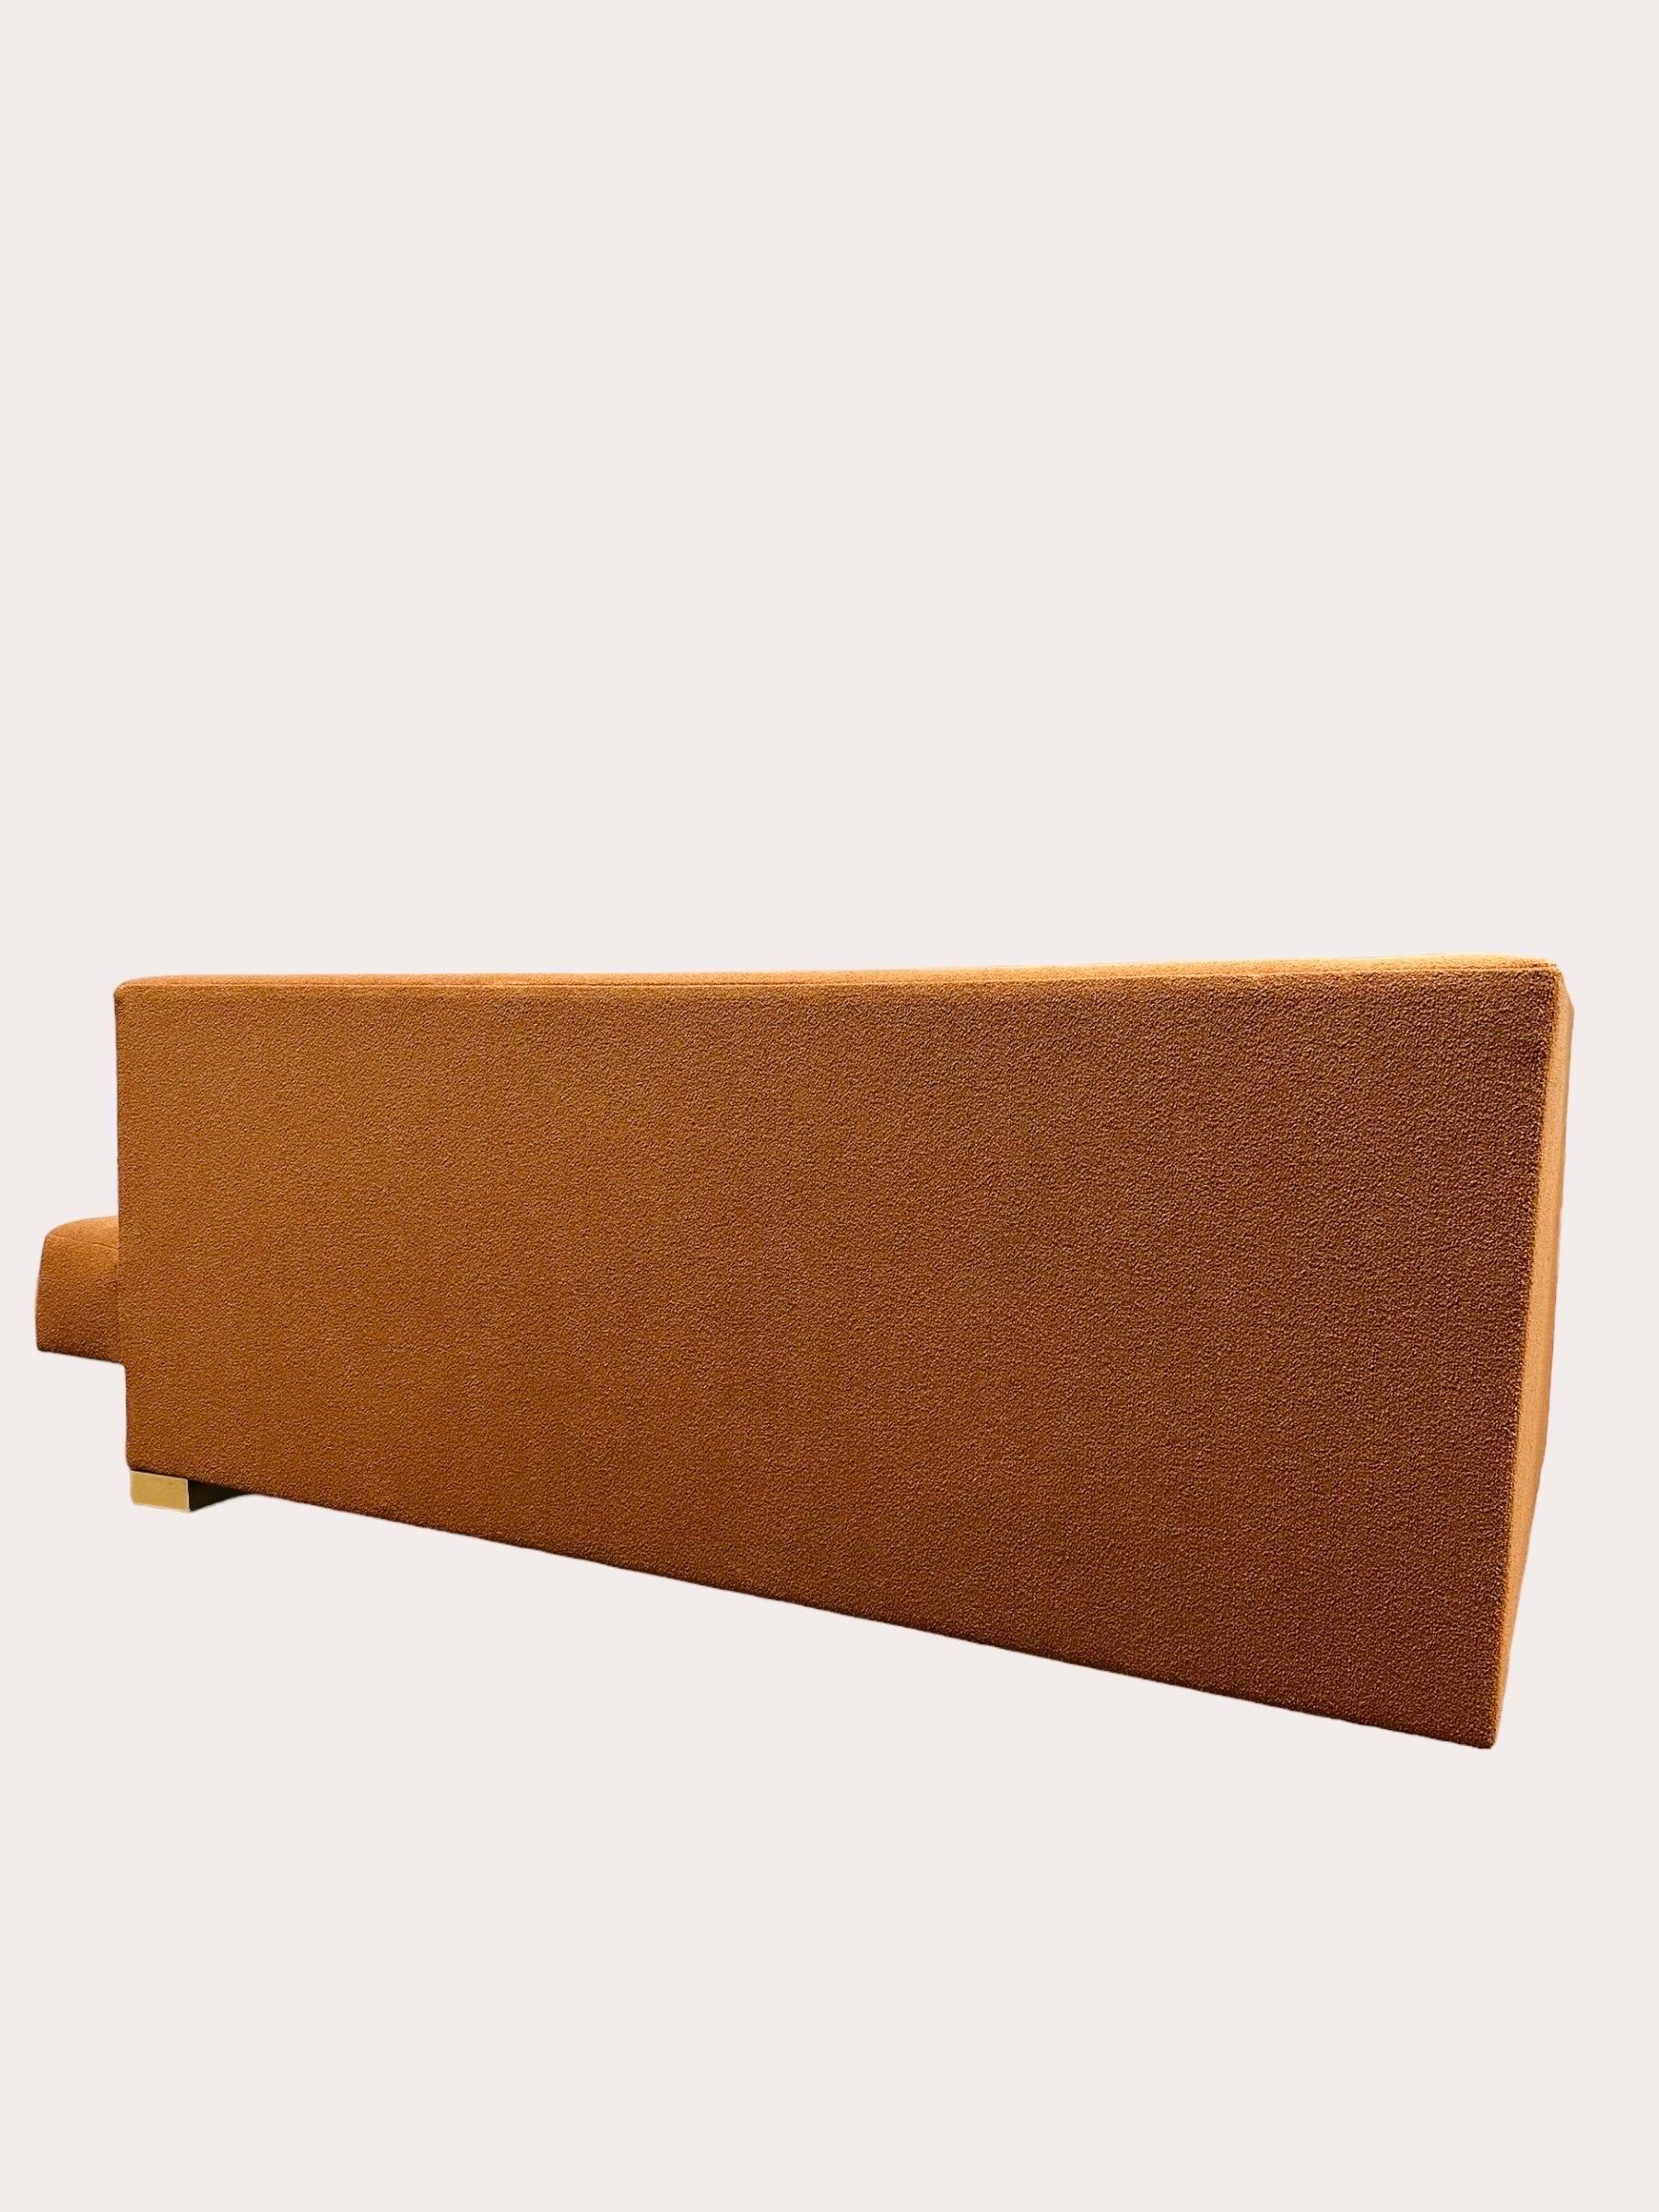 American Vladimir Kagan Large Sectional Custom L Shaped Sofa Rust bouclé Vintage Certifed For Sale